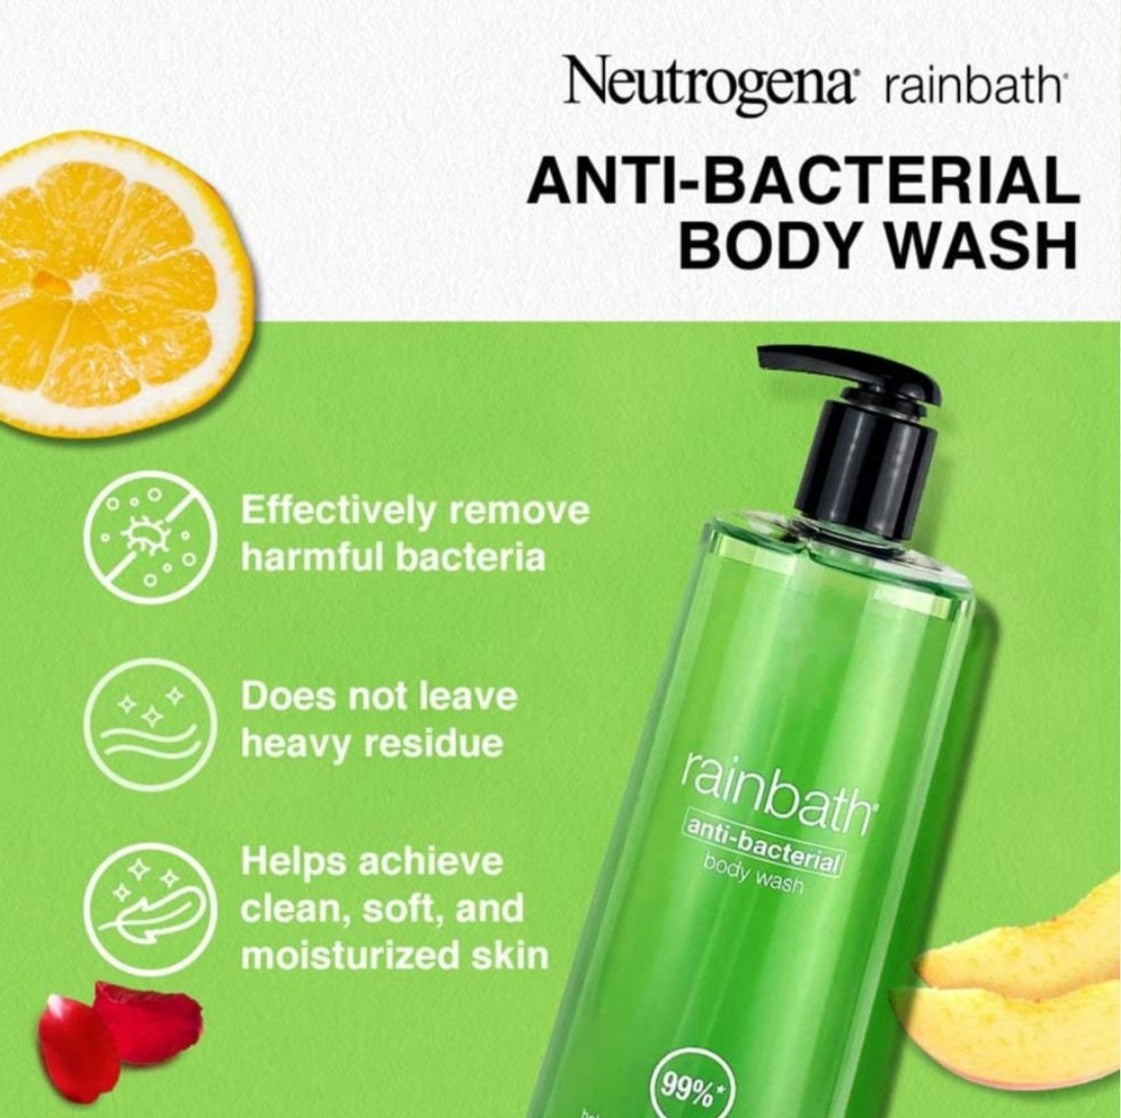 Neutrogena Rainbath Anti - Bacterial Shower Gel ရေချိုးဆပ်ပြာ  (Protection From 99% Harmful Bacteria)  - 473ml